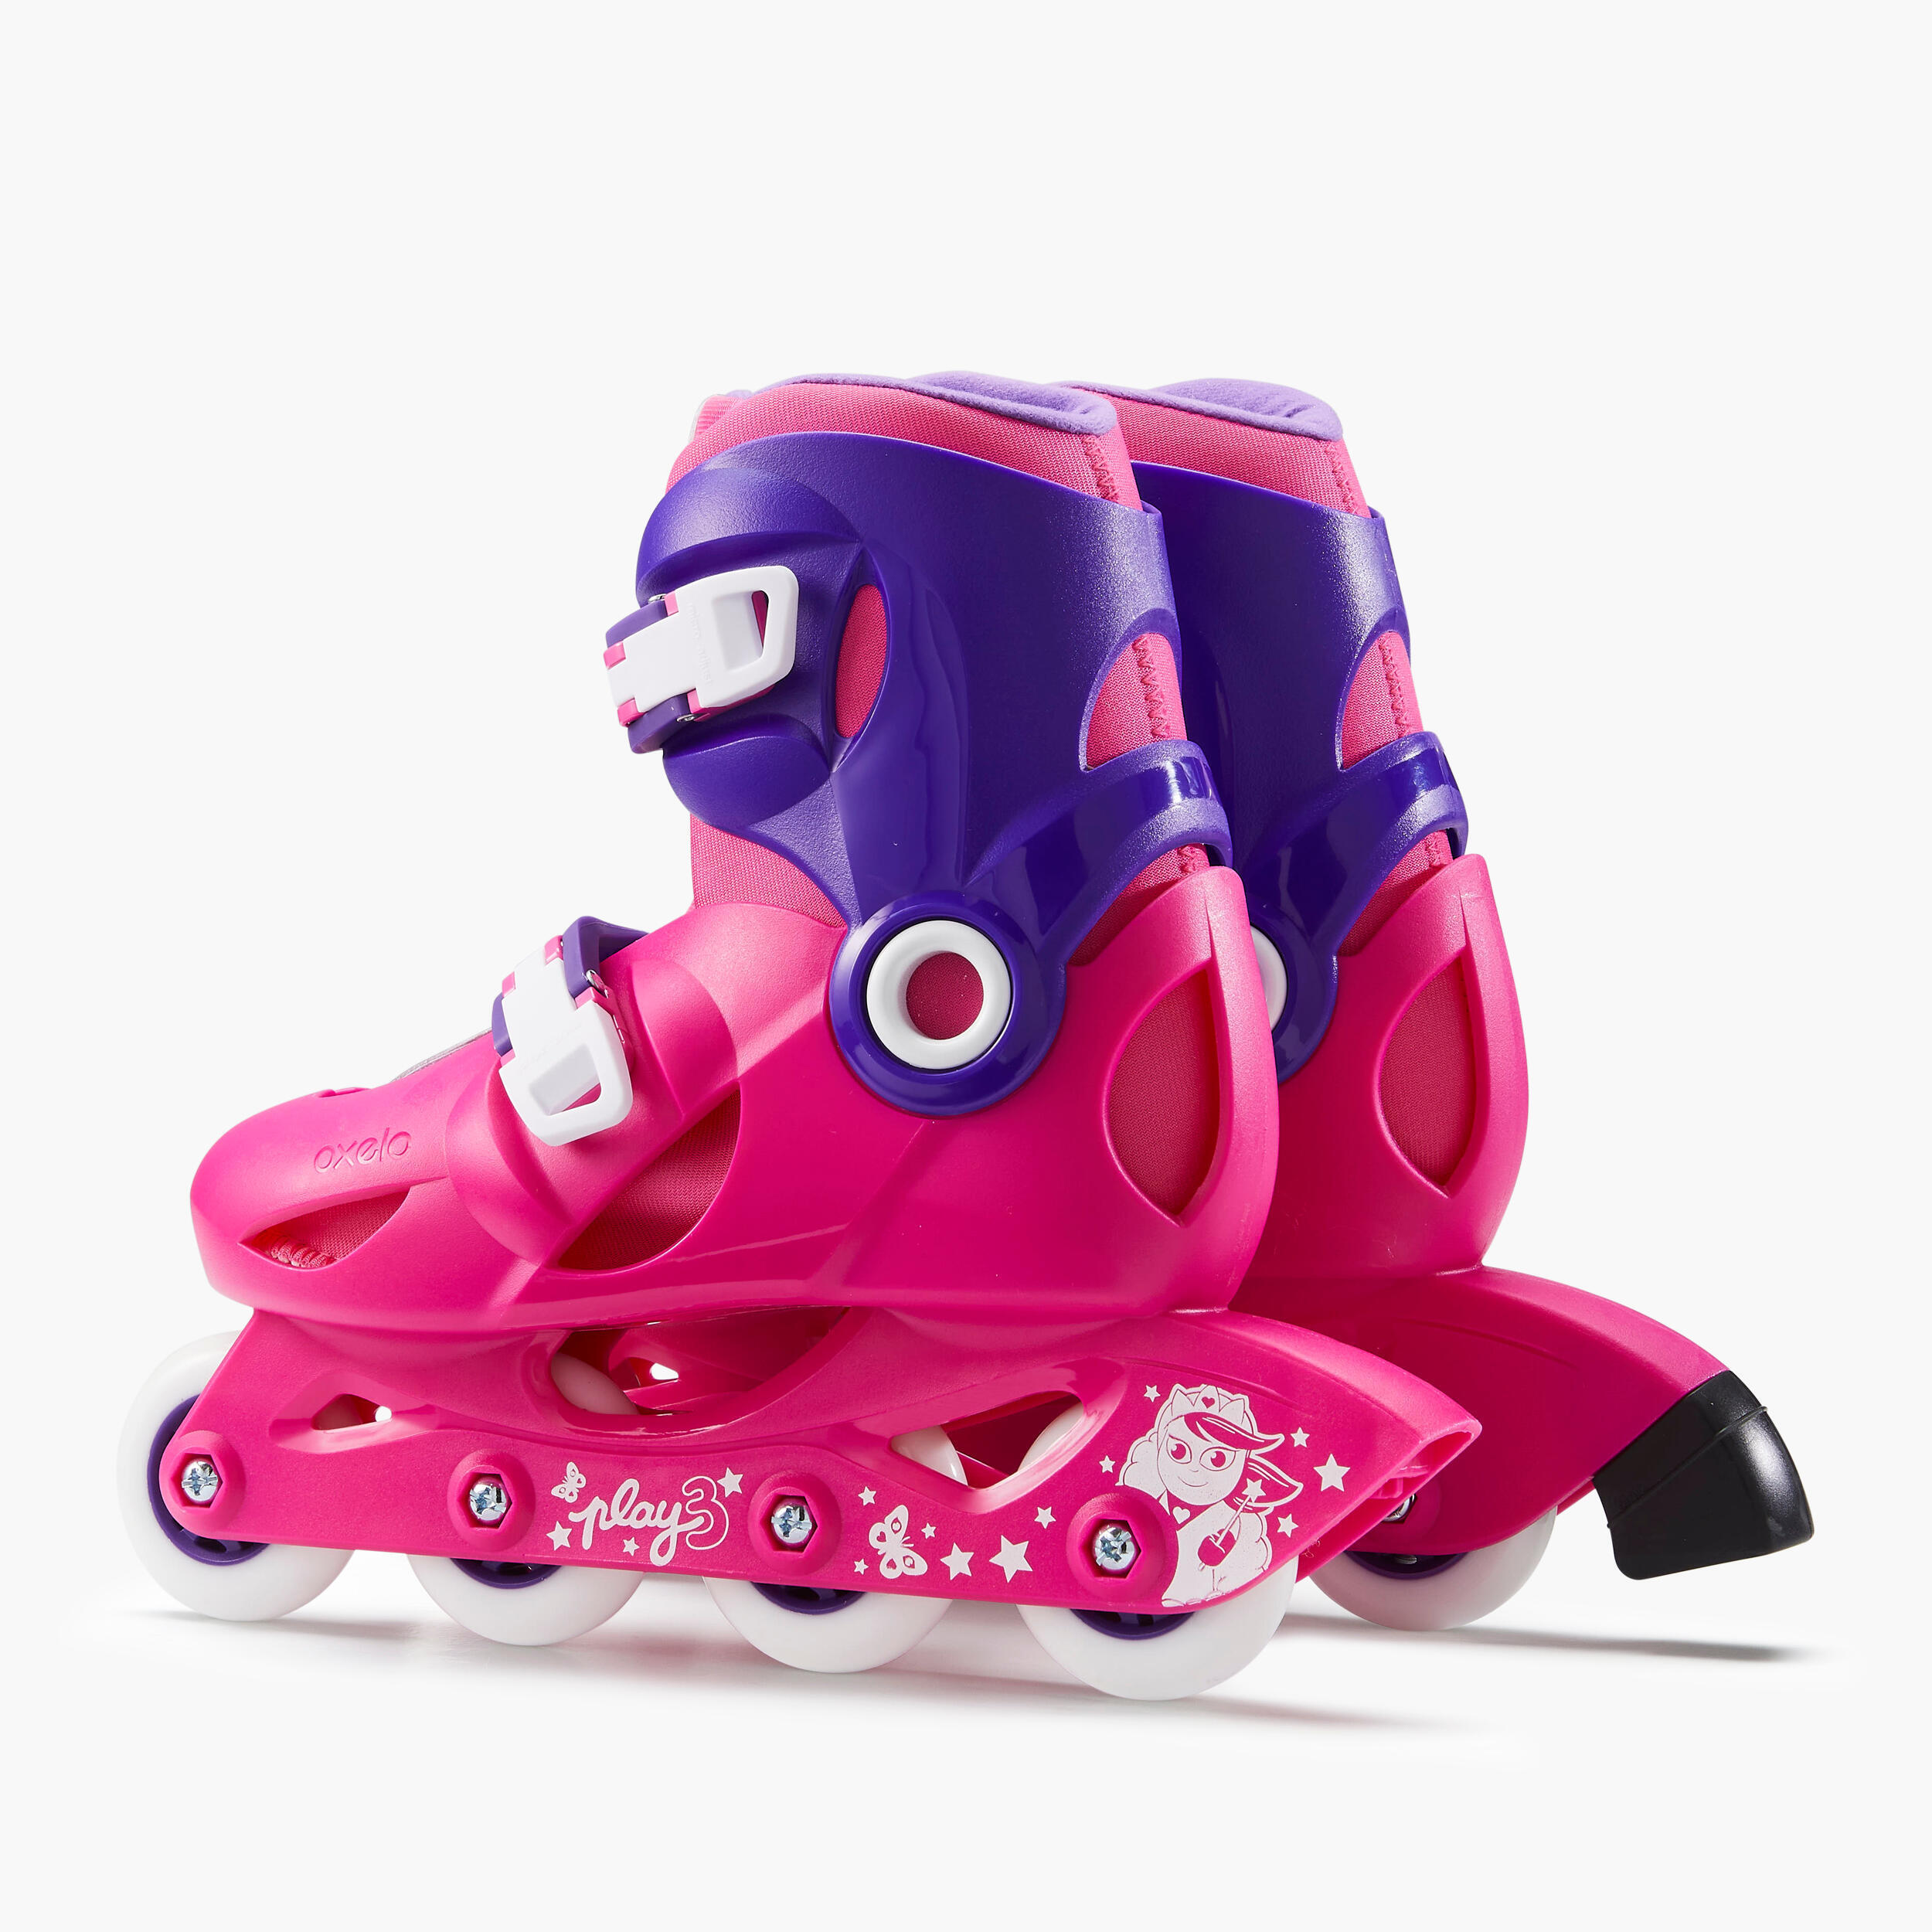 Play 3 Kids' Skates - Pink/Purple 5/12